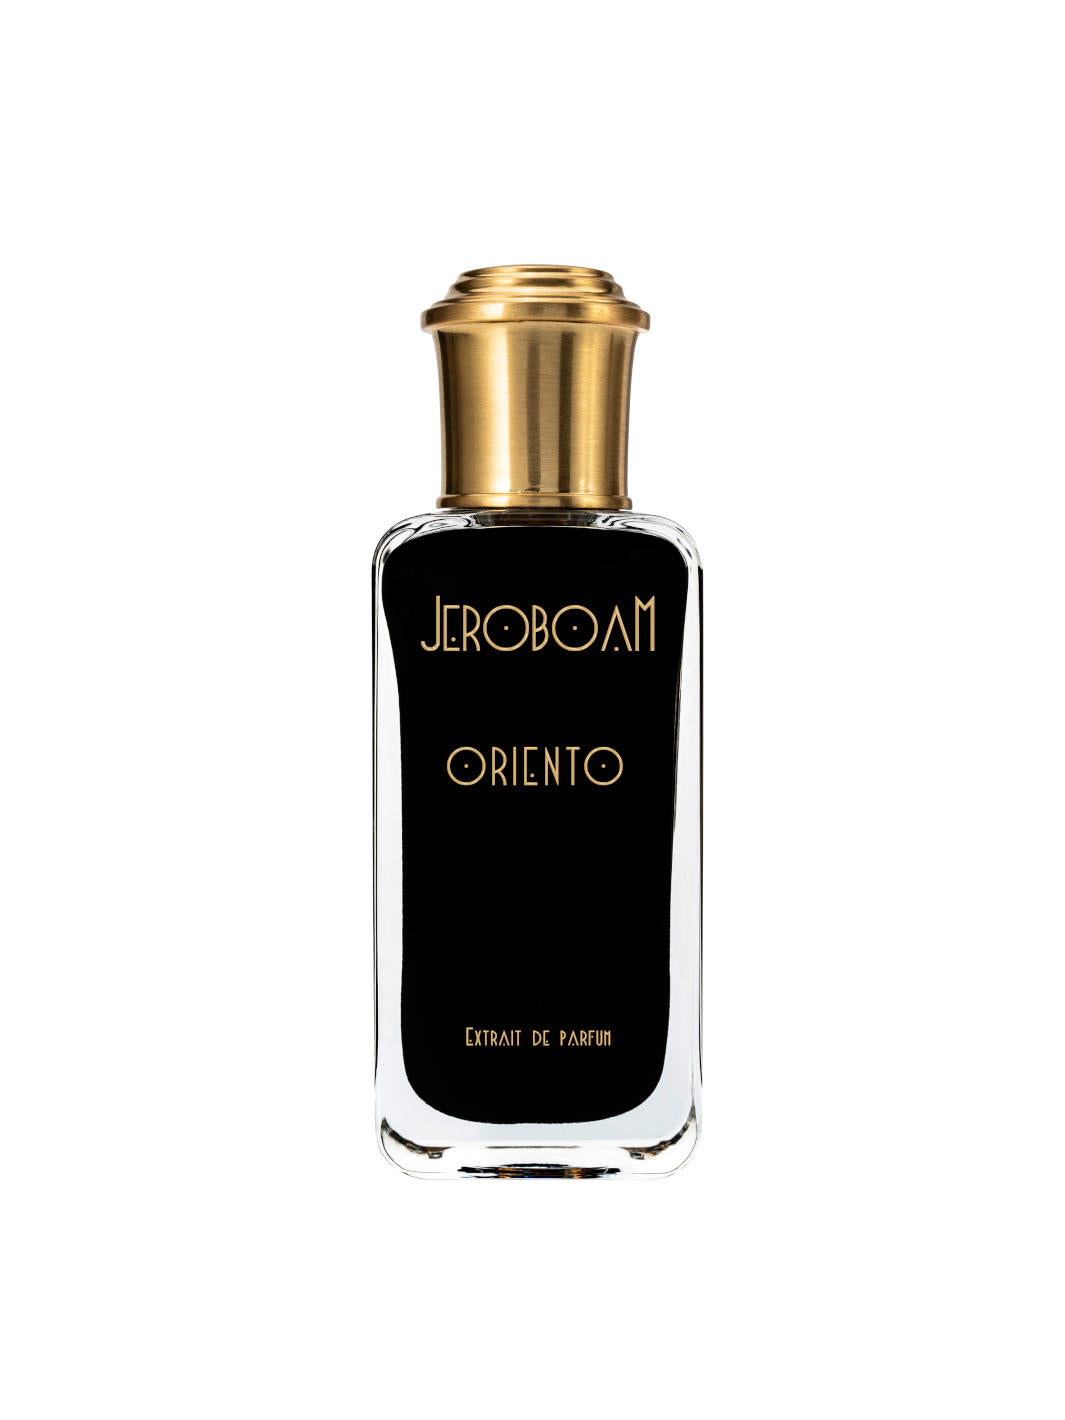 Jeroboam Oriento Extrait de Parfum 30 ml